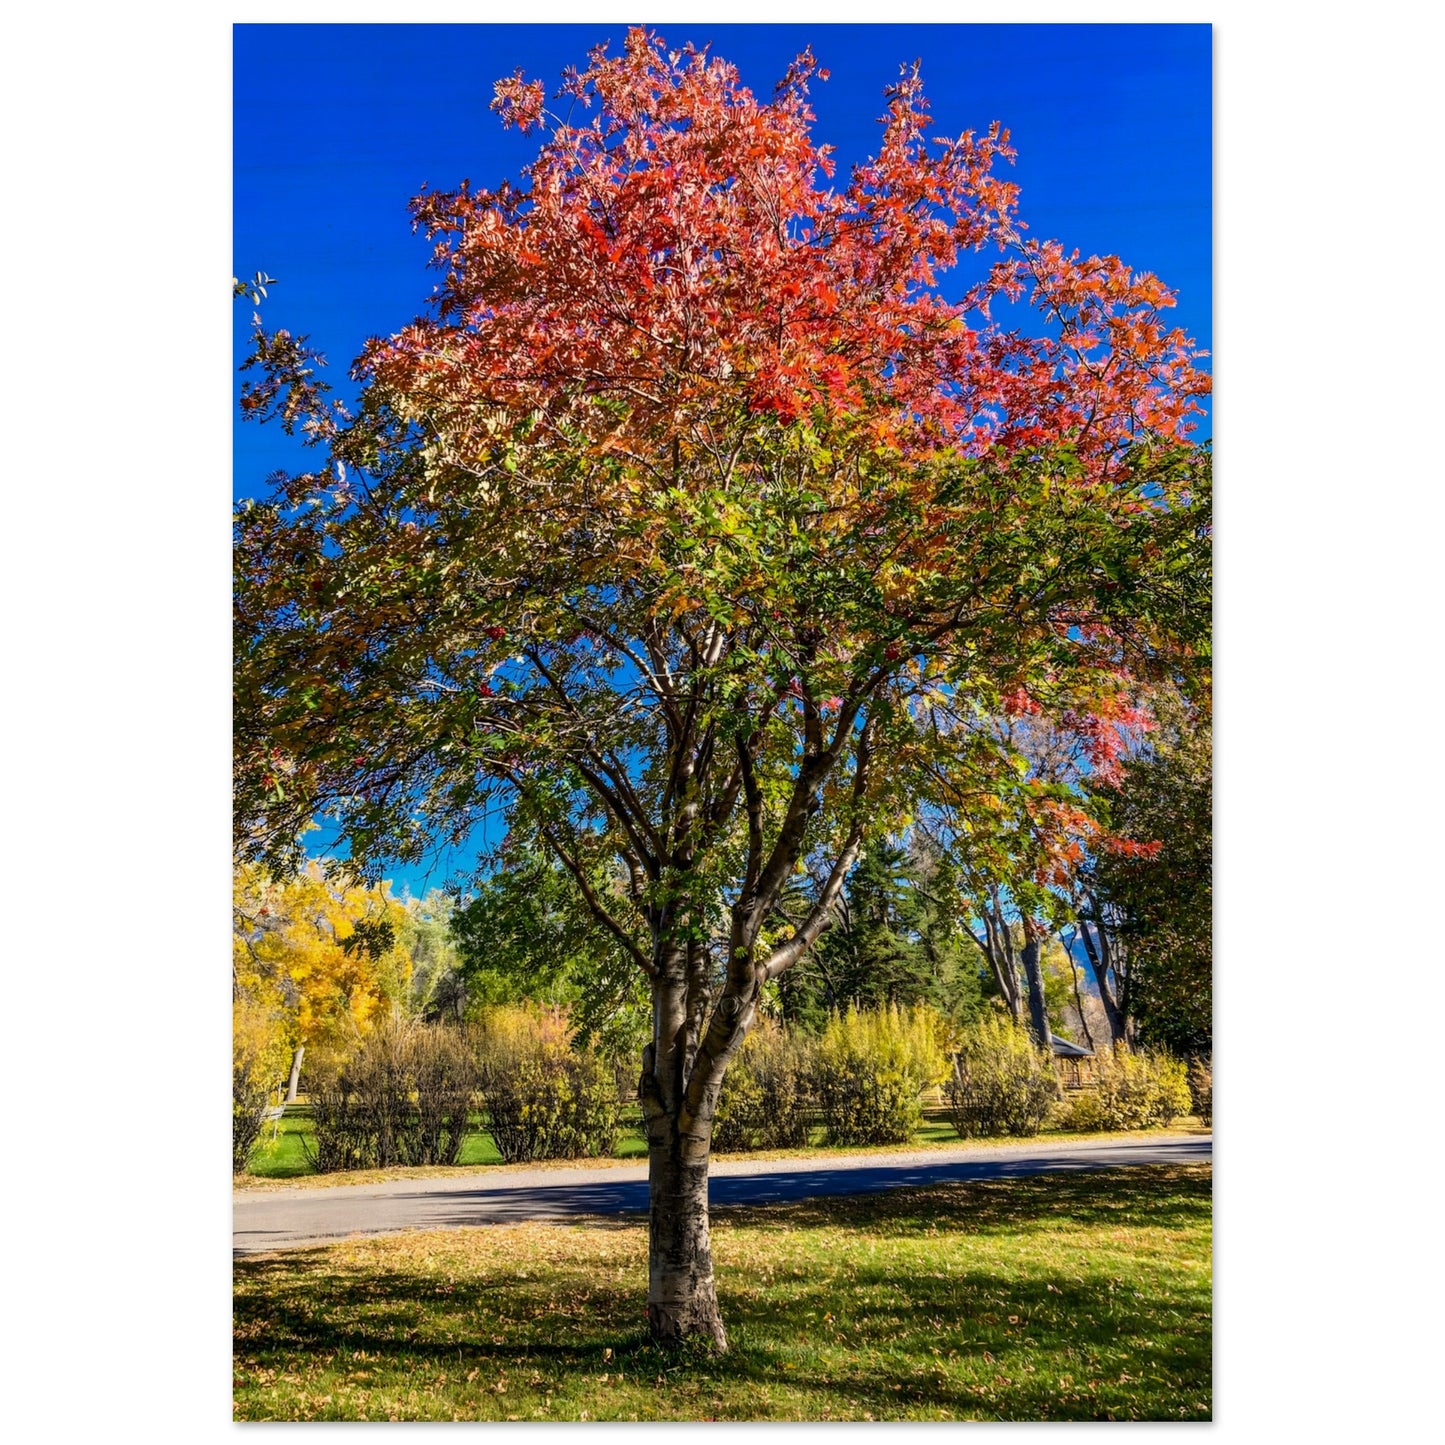 Prism Amelanchier: An Autumn Amelanchier Tree in Montana Wood Print. Original Photography by James Bonner.